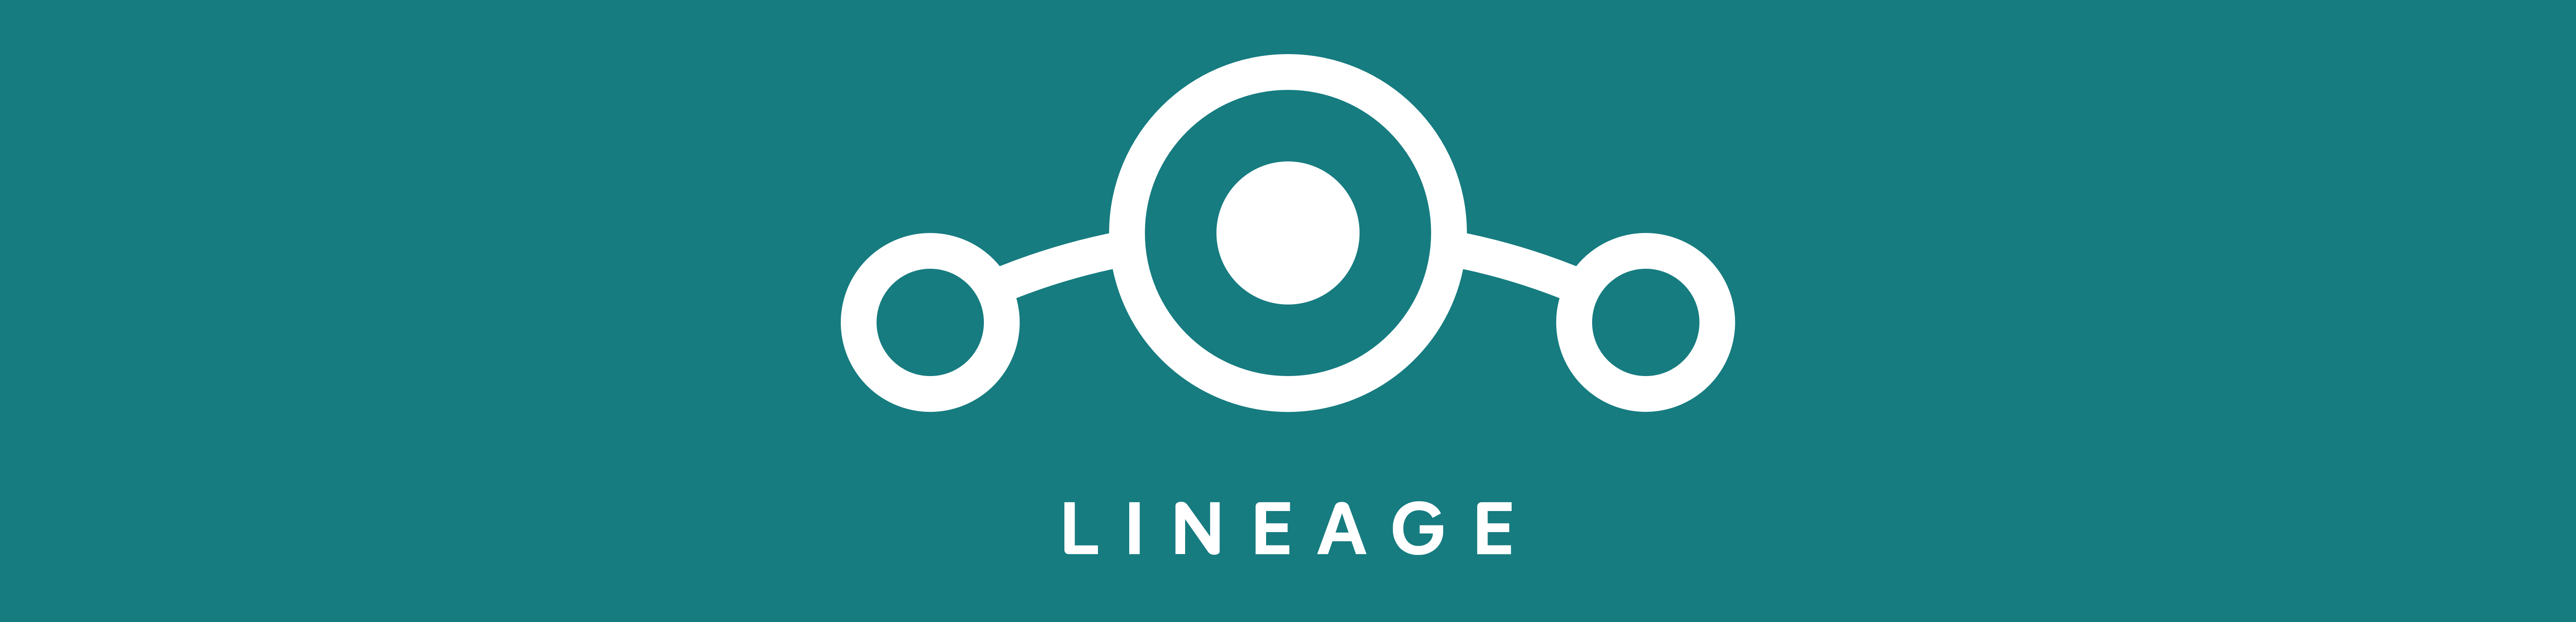 LineageOS长版.png